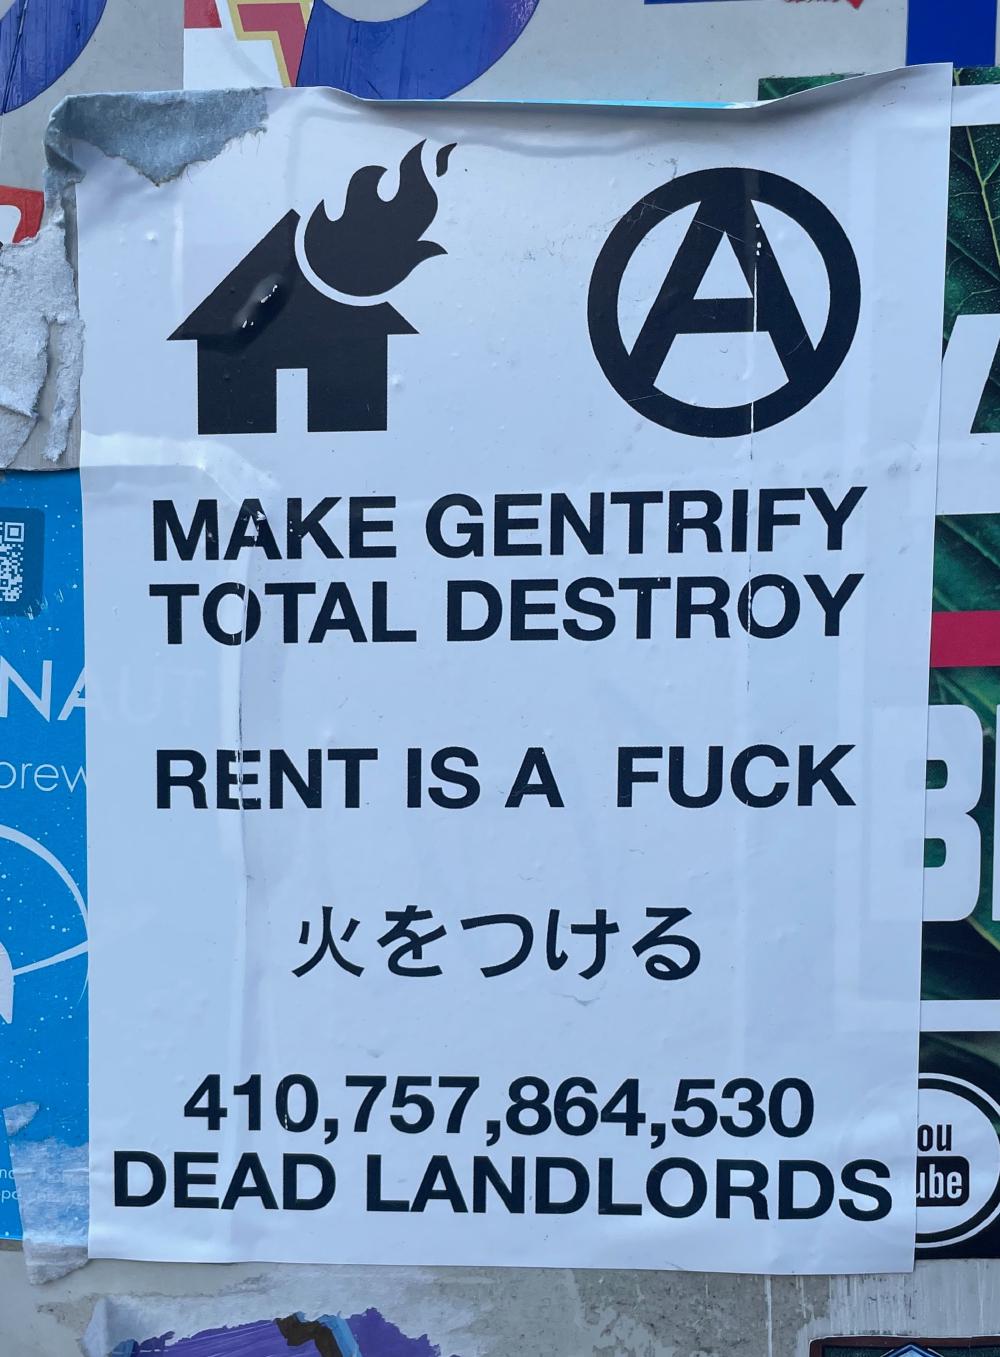 Make gentrify total destroy, rent is a fuck, 410,757,864,530 dead landlords